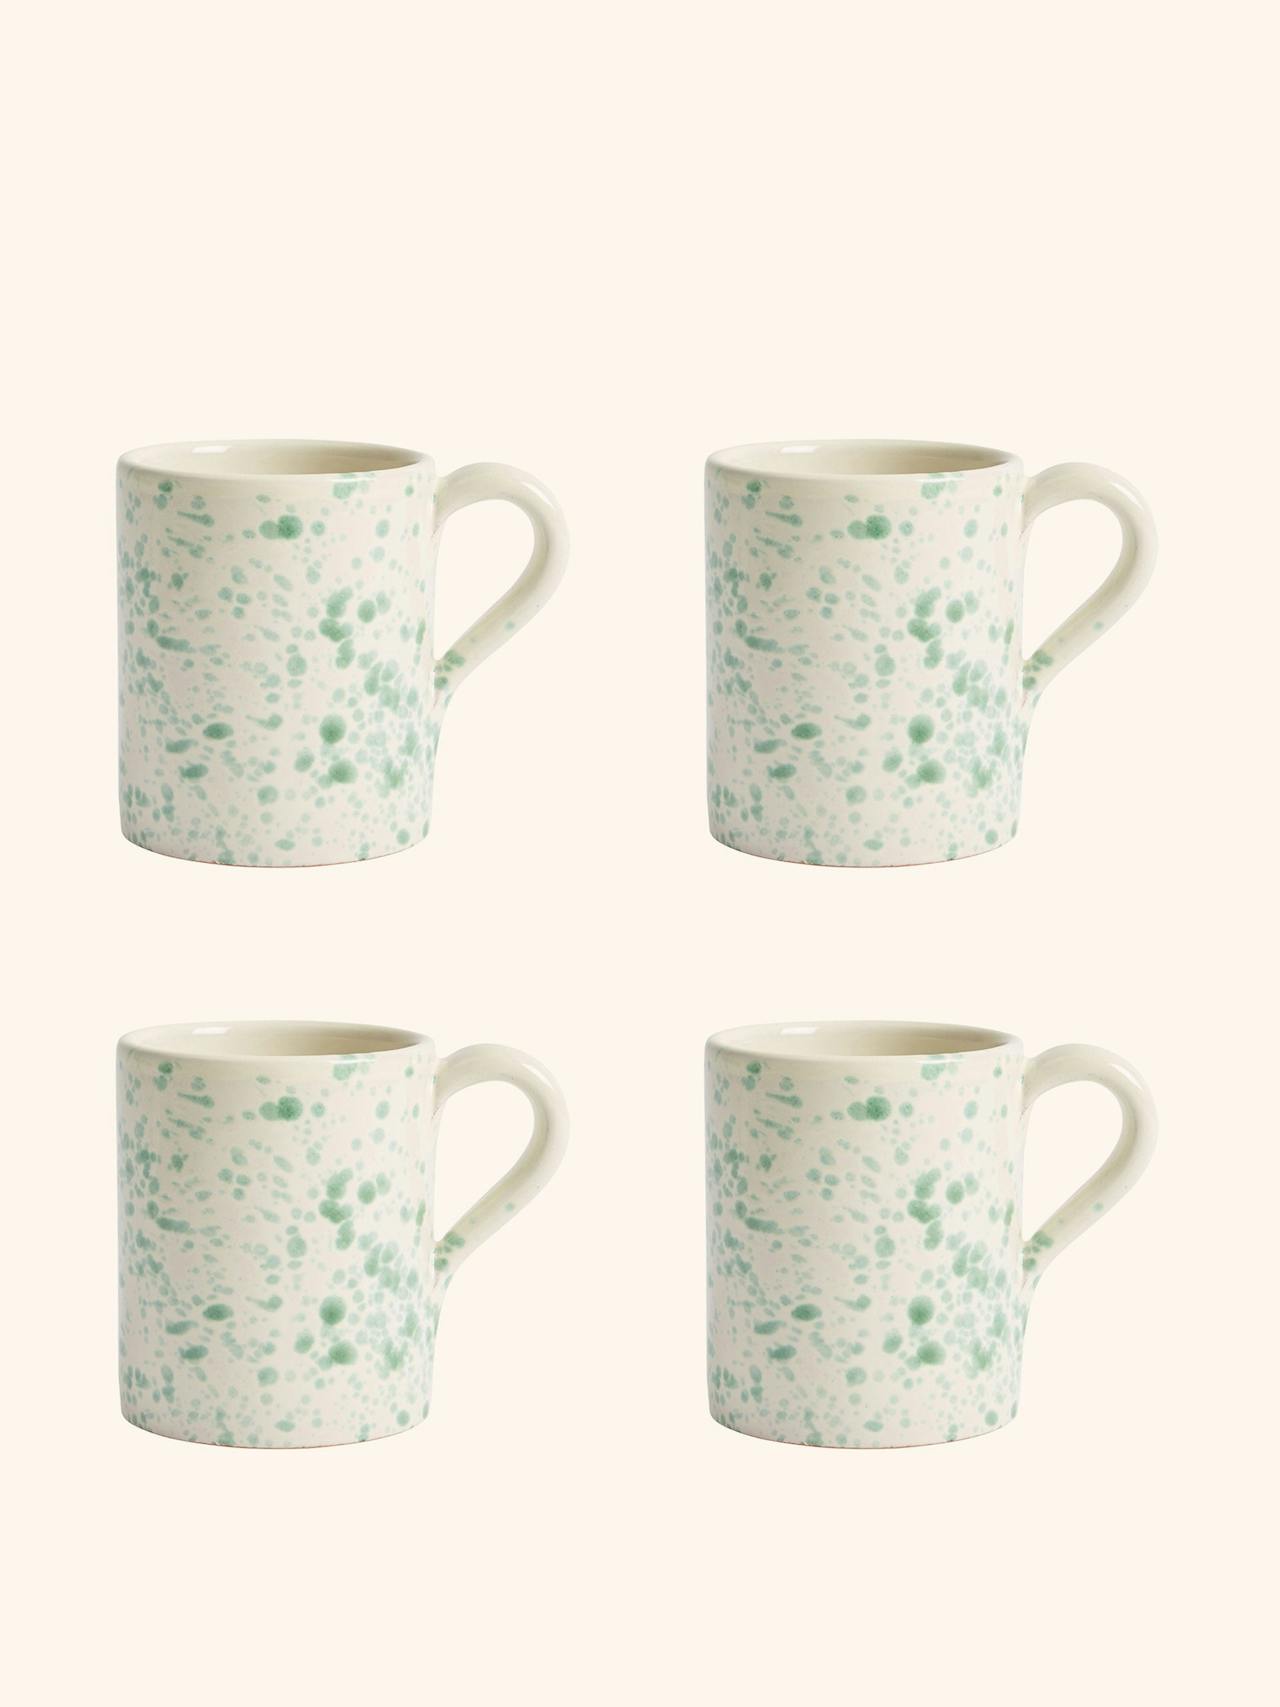 Pistachio coffee mugs, set of 4